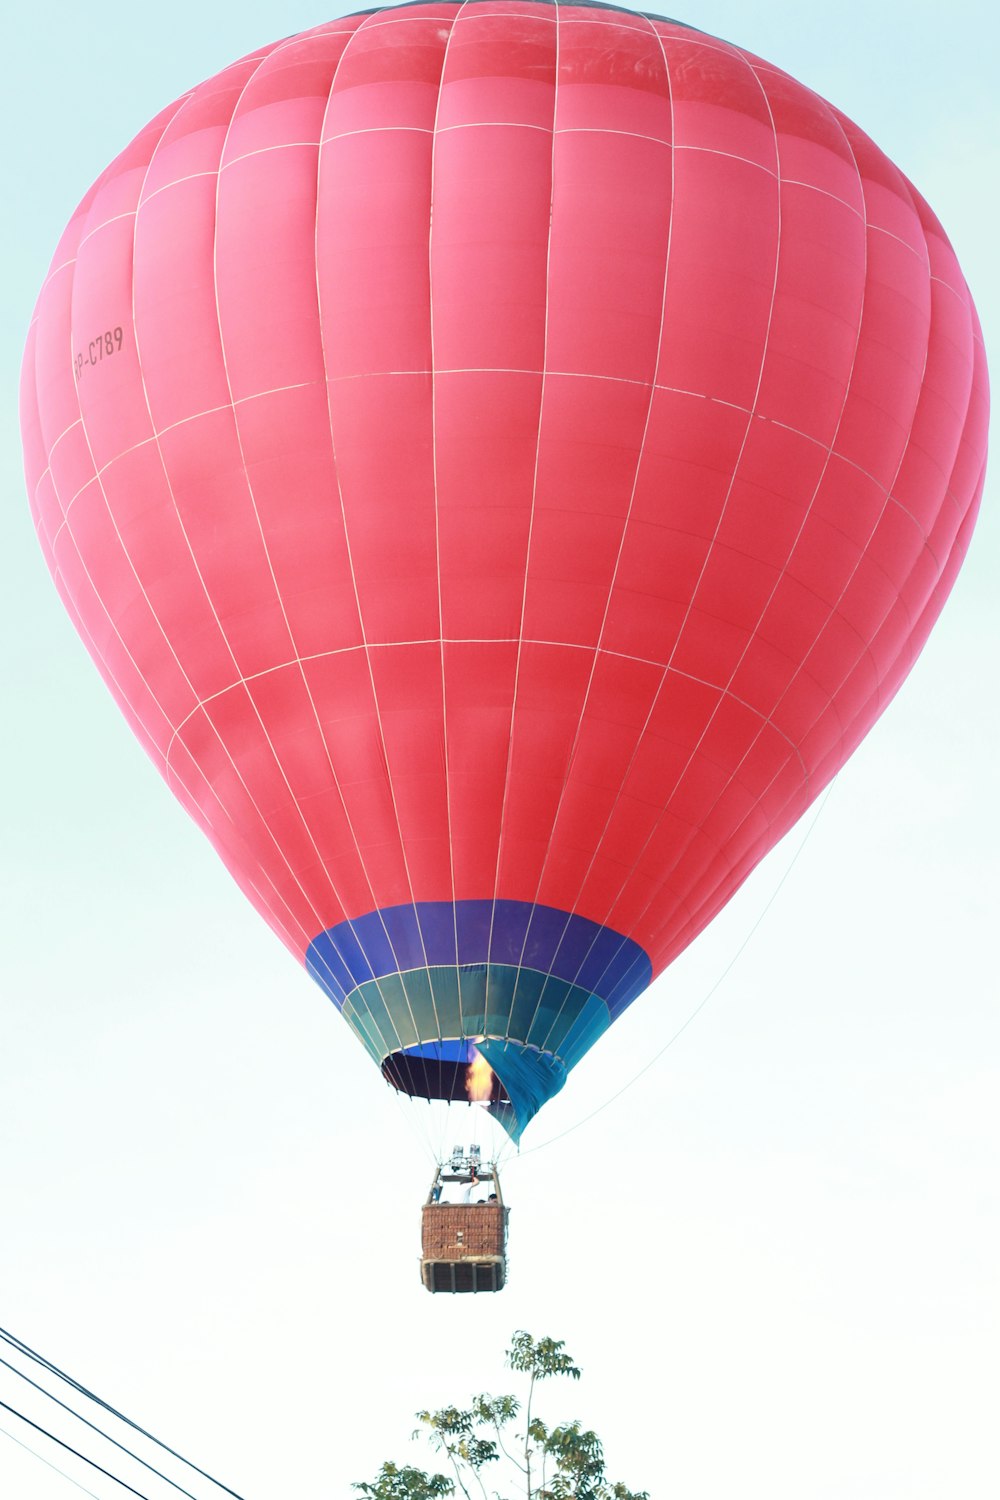 a large hot air balloon flying through a blue sky